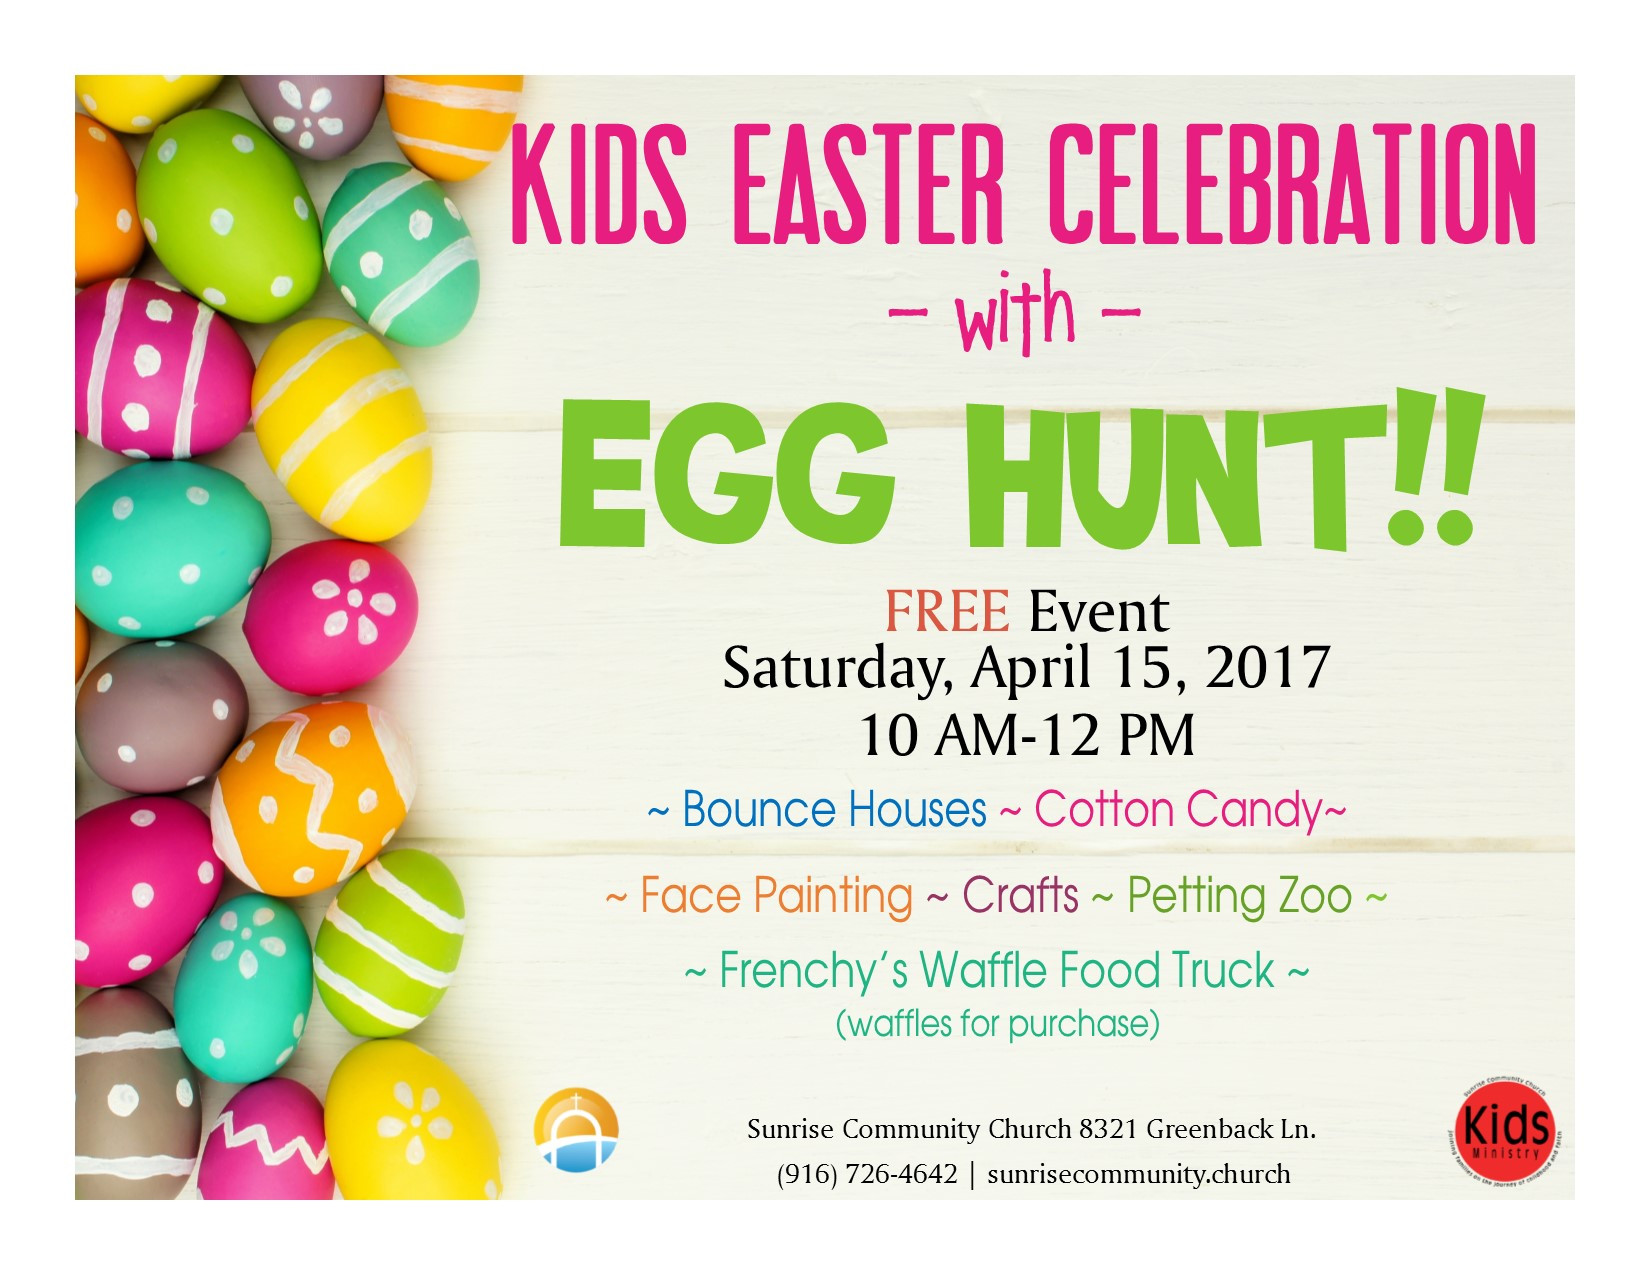 Easter Egg Hunt Ideas For Church
 Kids Easter Celebration with Egg Hunt presented by Sunrise